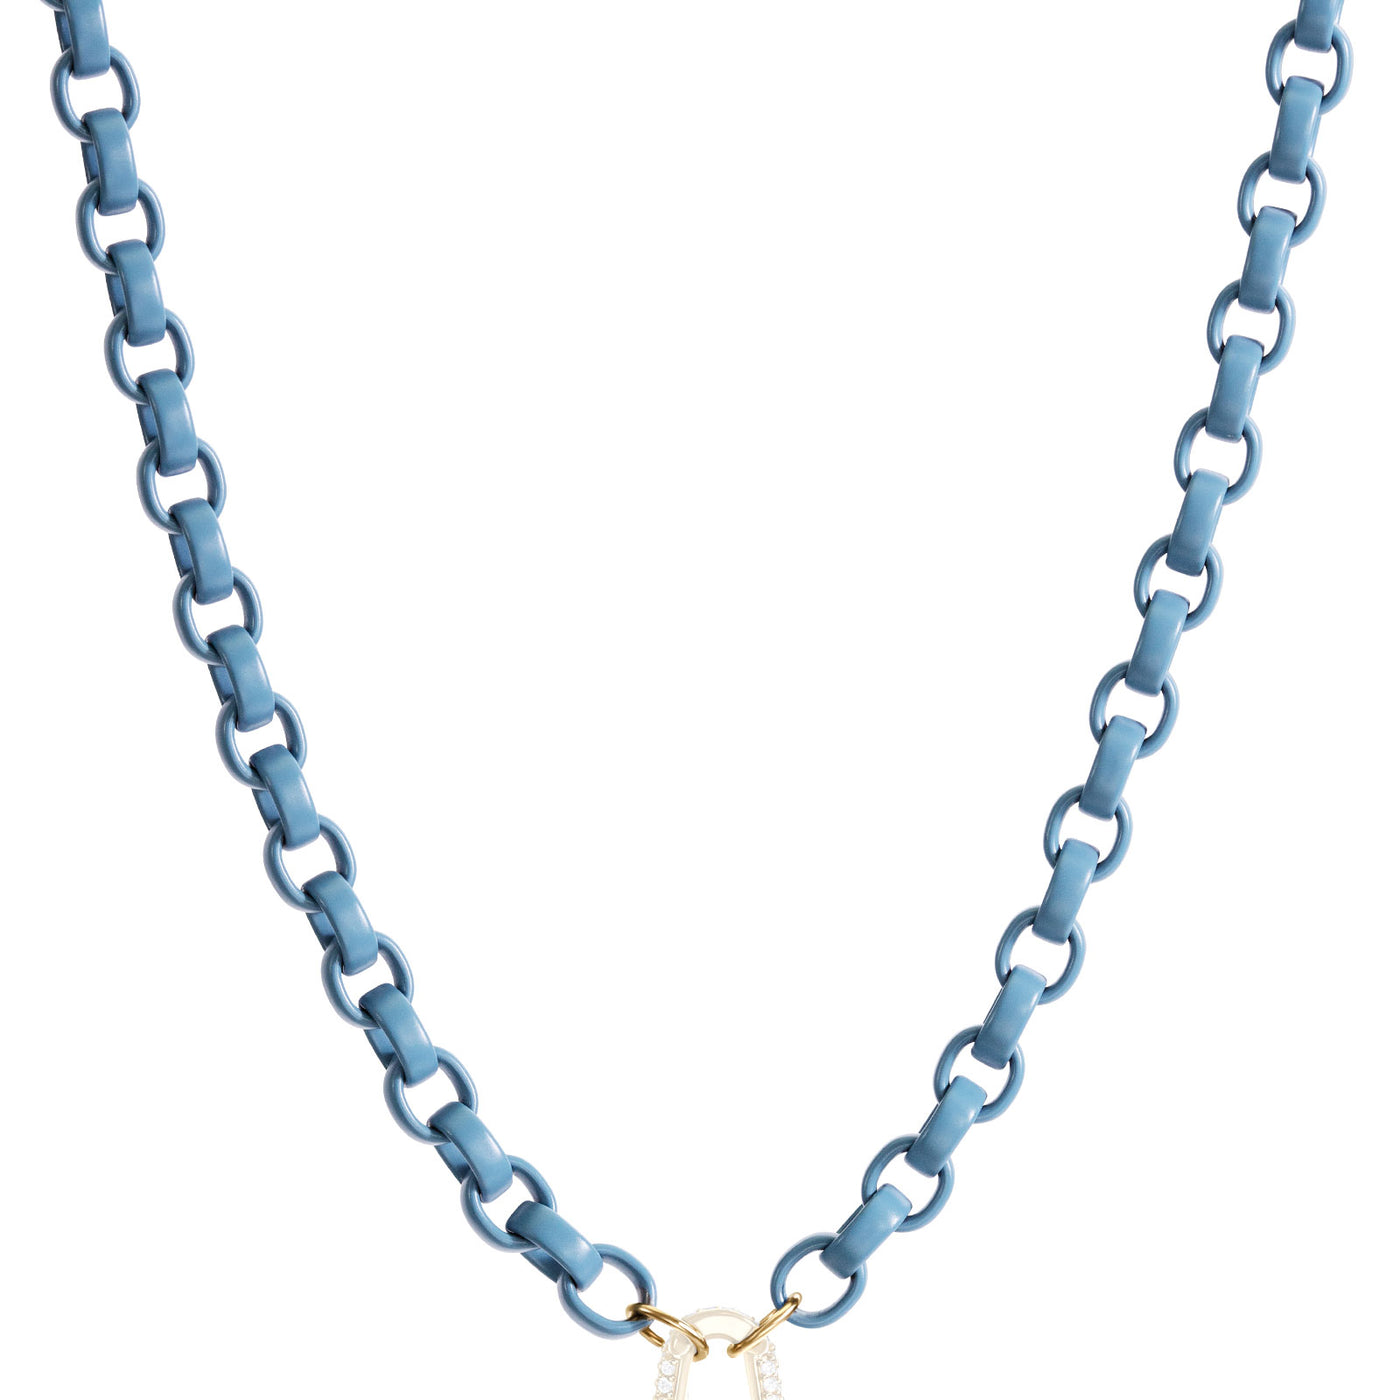 5.6mm Stainless Steel Aqua Blue Hinge Chain